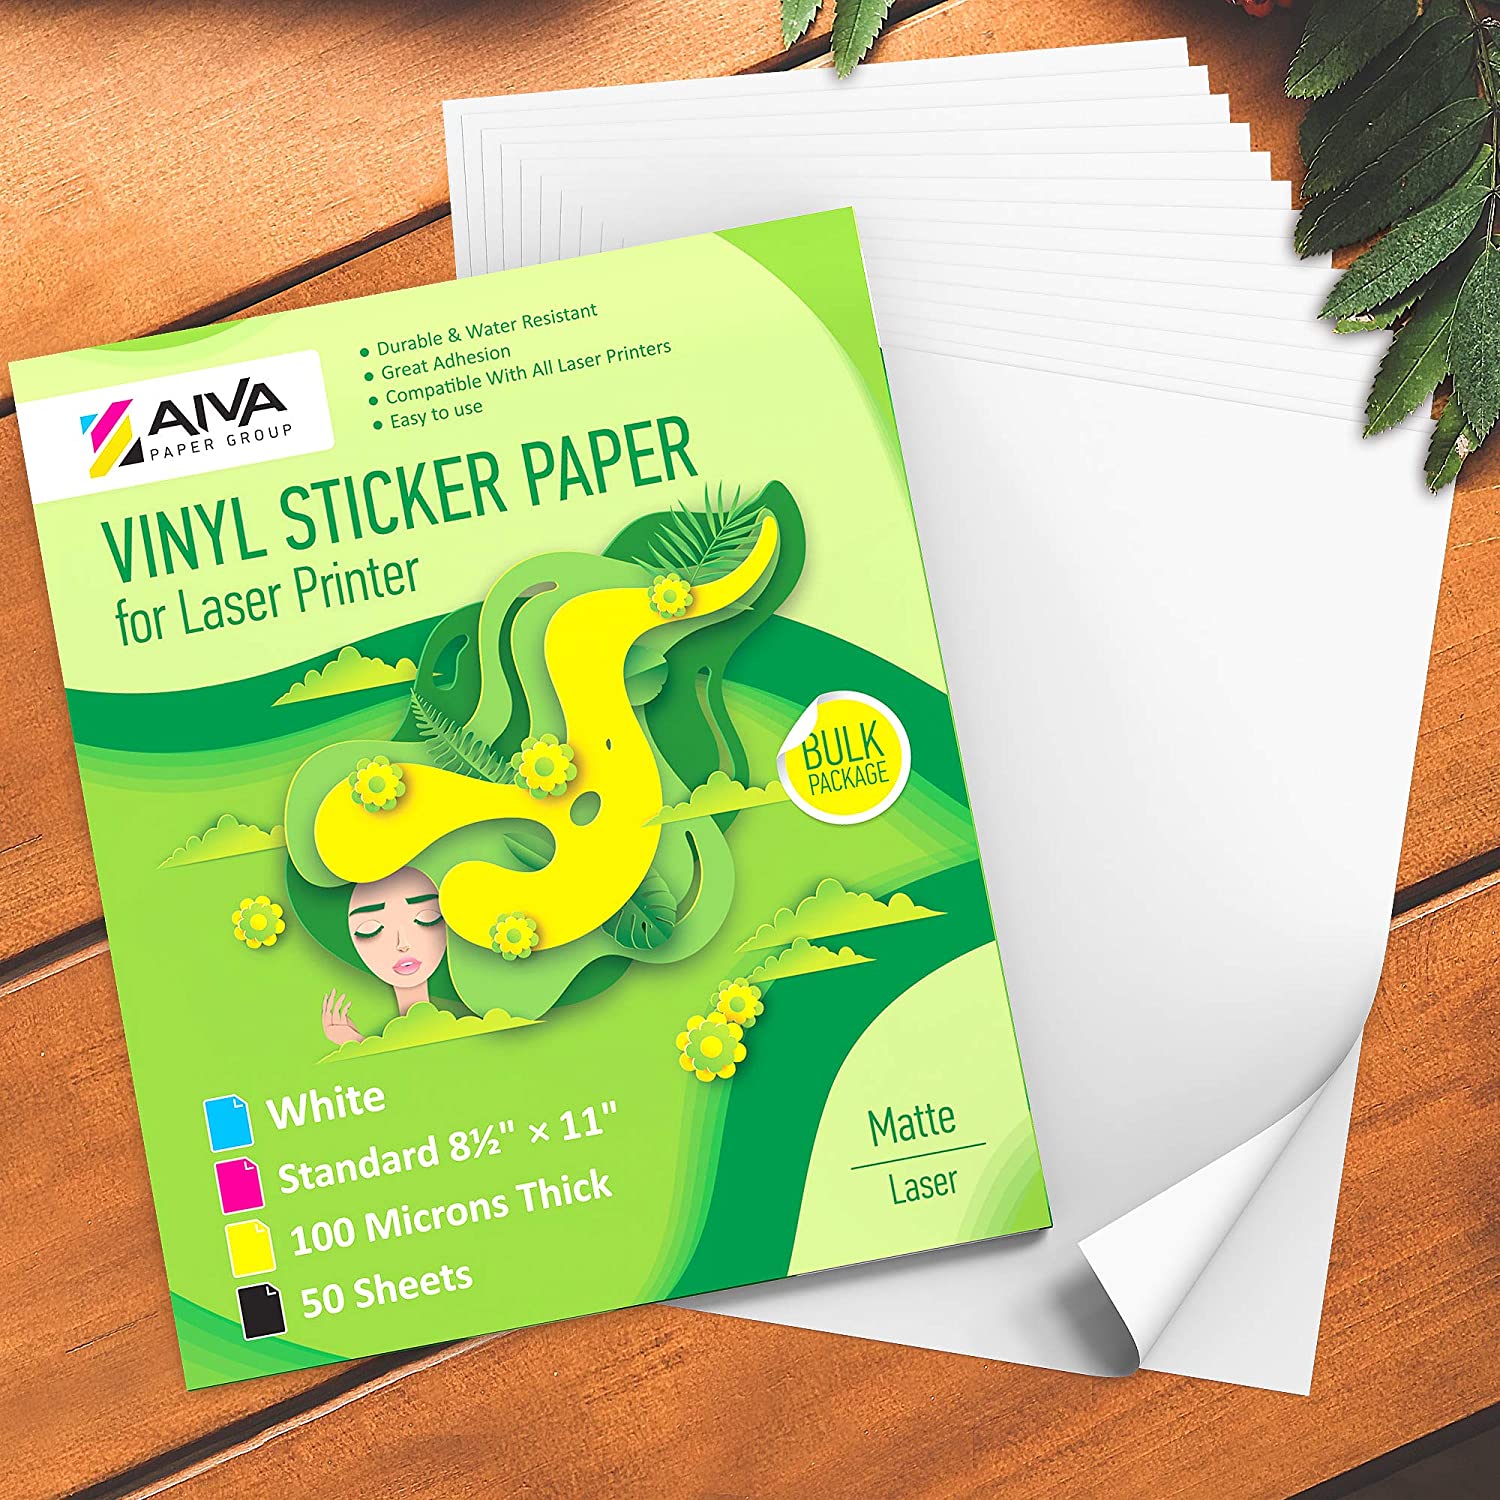 Printable Vinyl Sticker Paper Inkjet Frosty Clear 15 sheets – AIVA